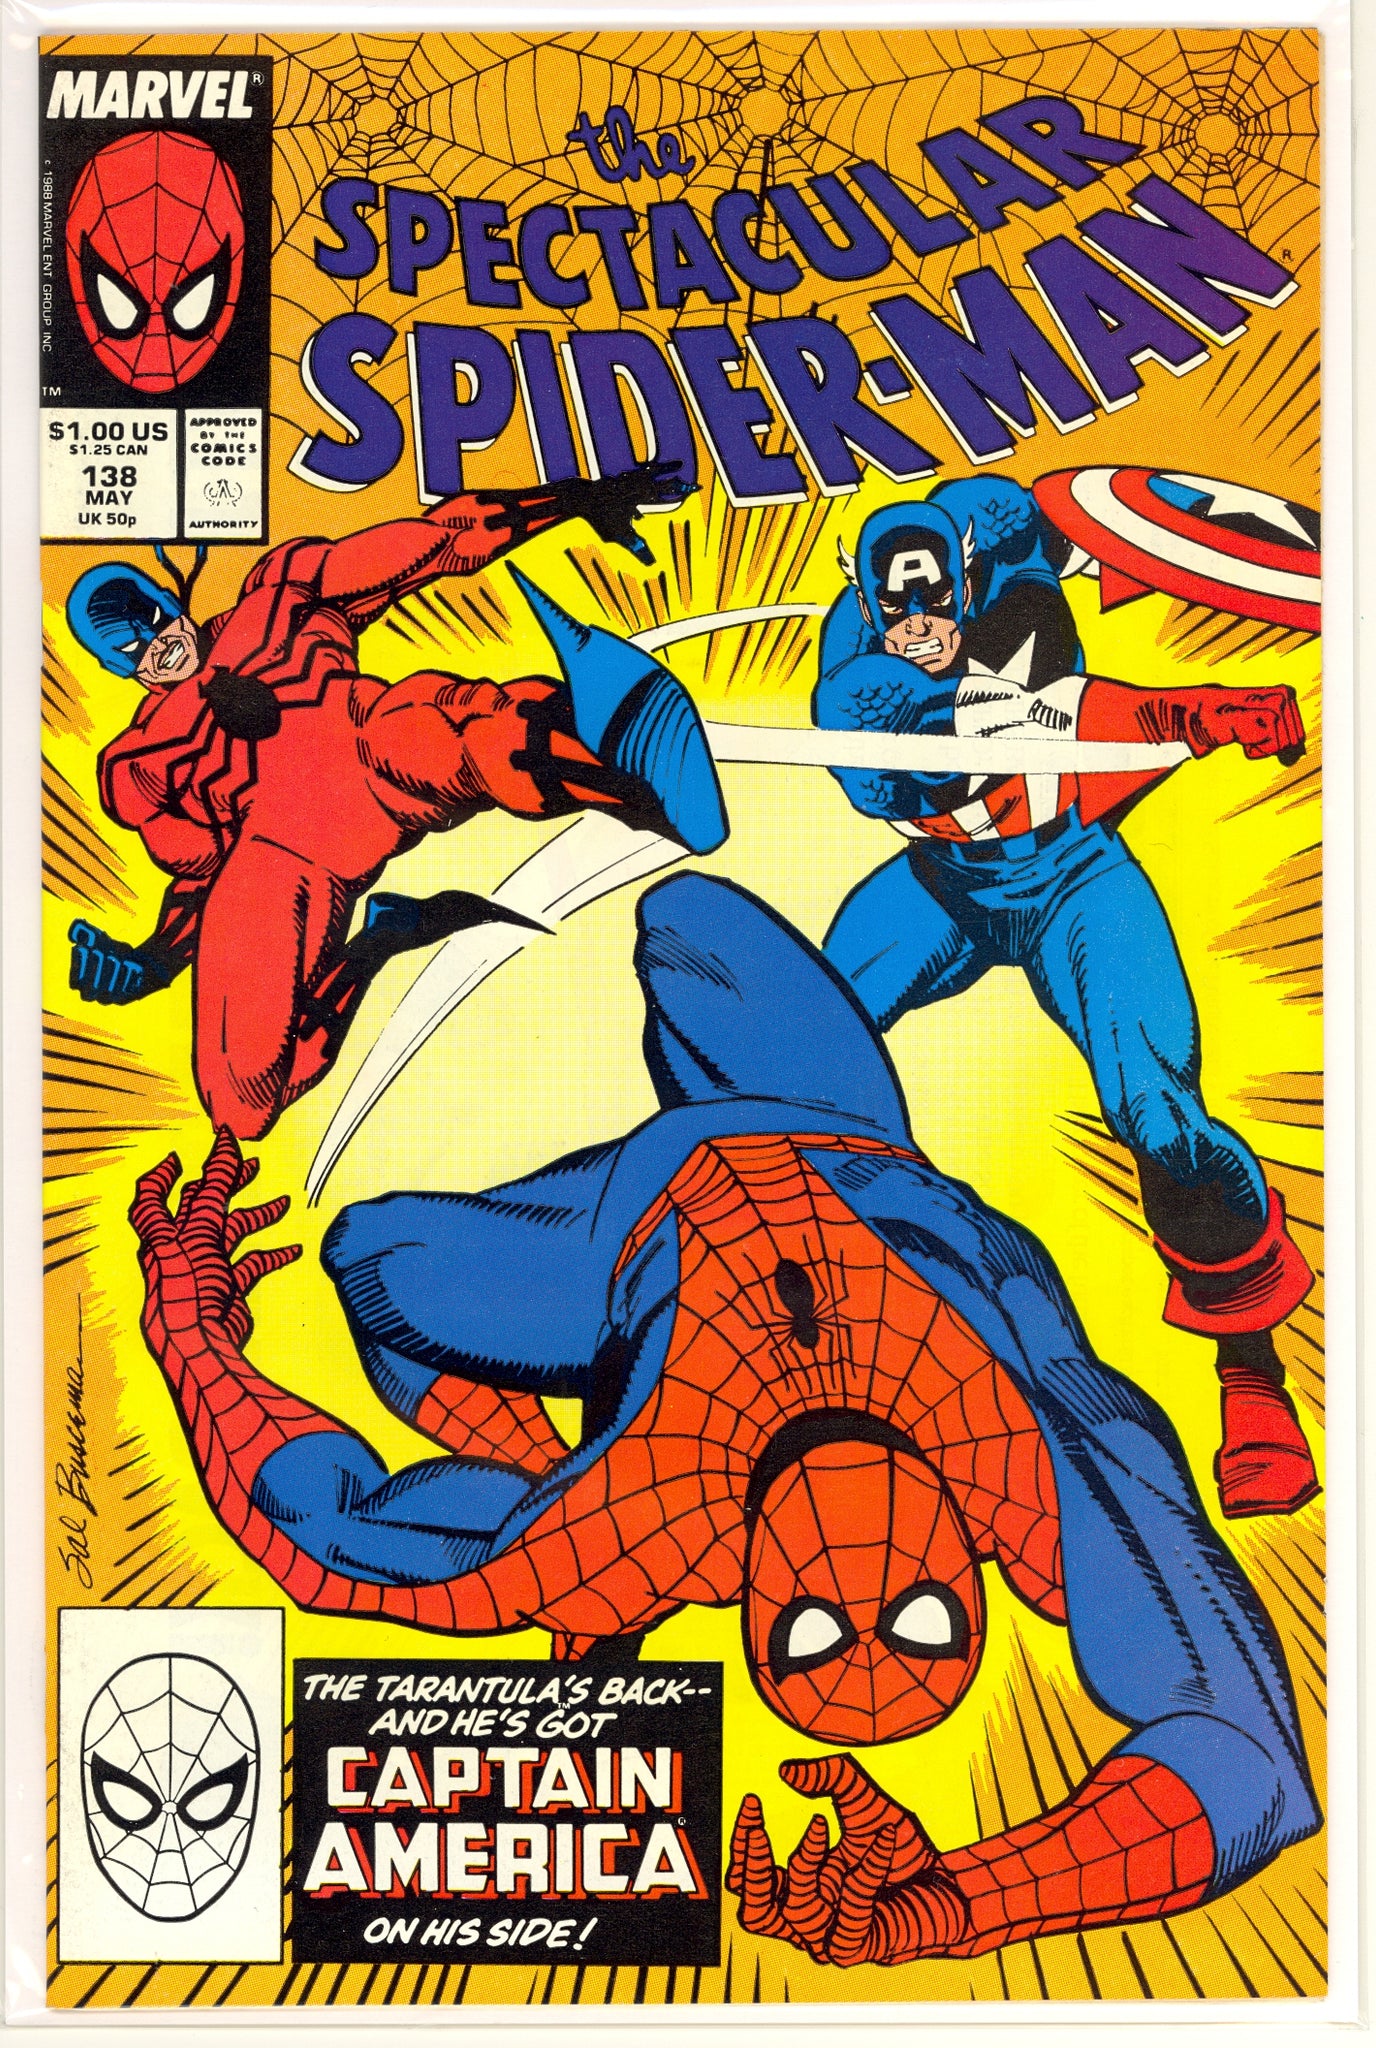 Spectacular Spider-Man #138 (1988) Tombstone, Captain America, Tarantula